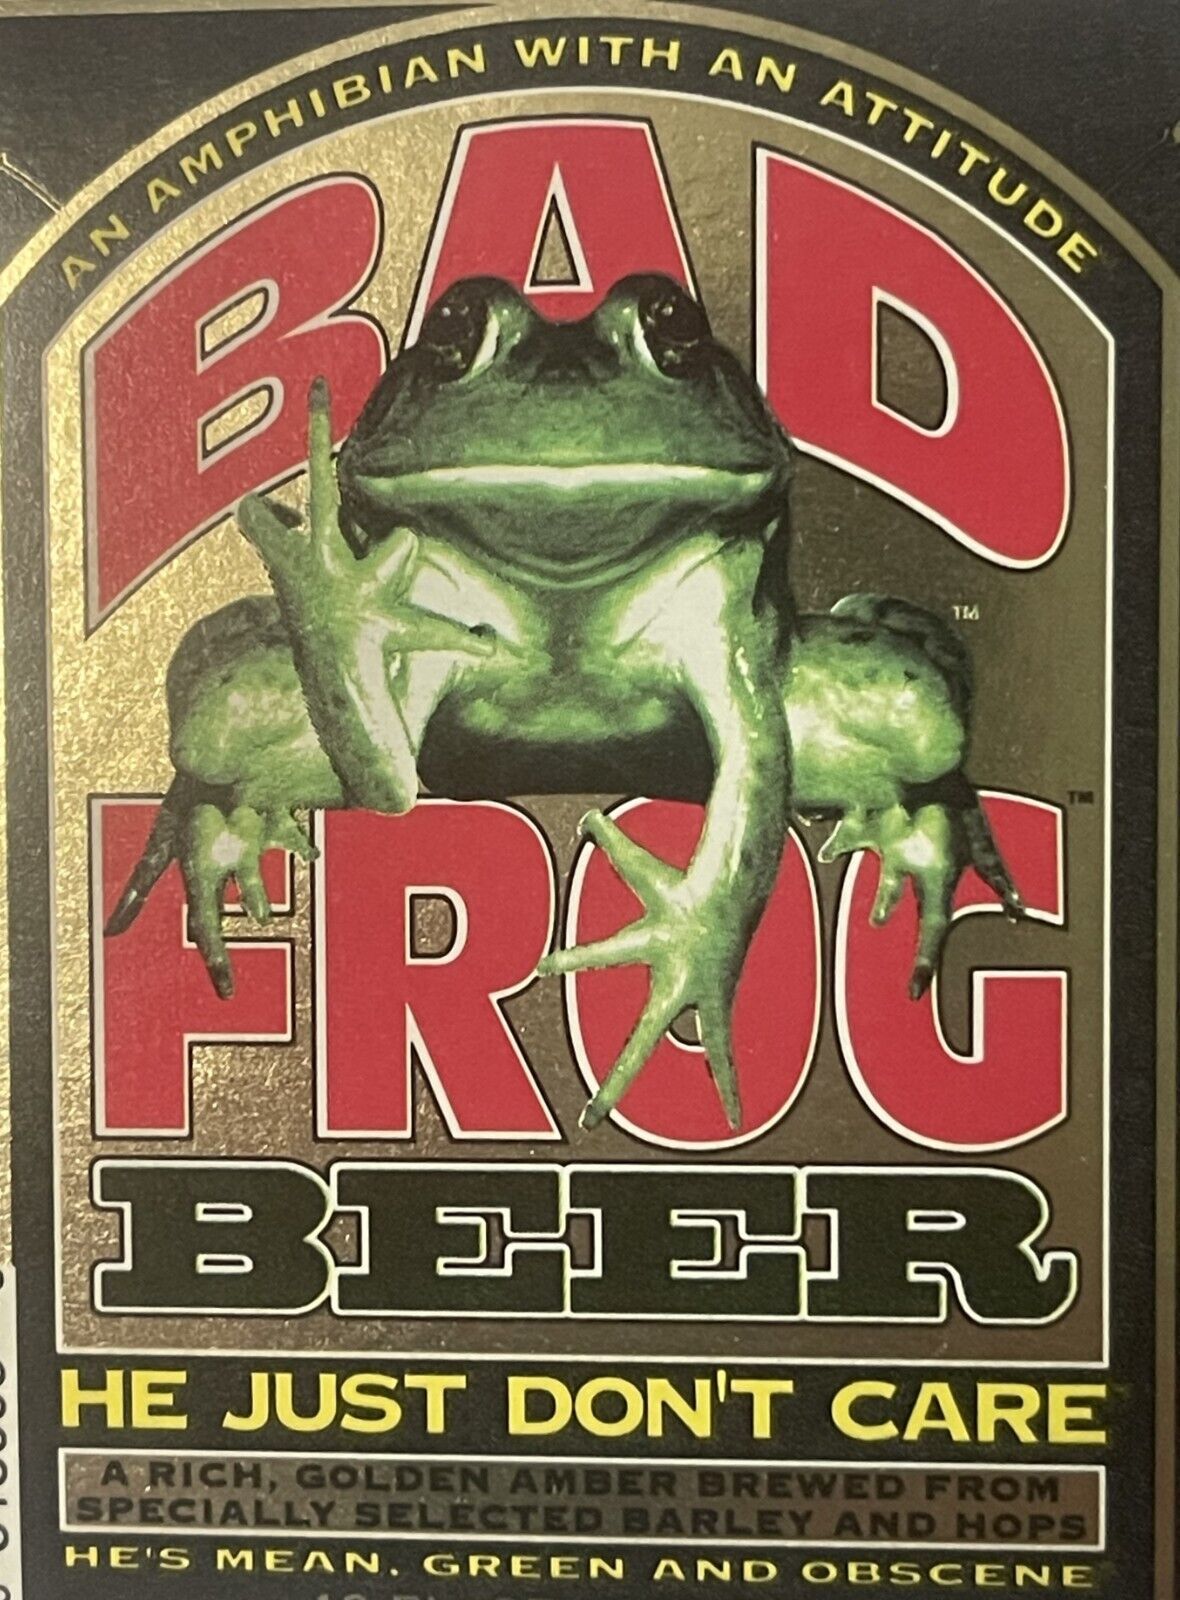 Infamous Vintage 🐸 Bad Frog Beer Label Banned in 8 States for Being Obscene